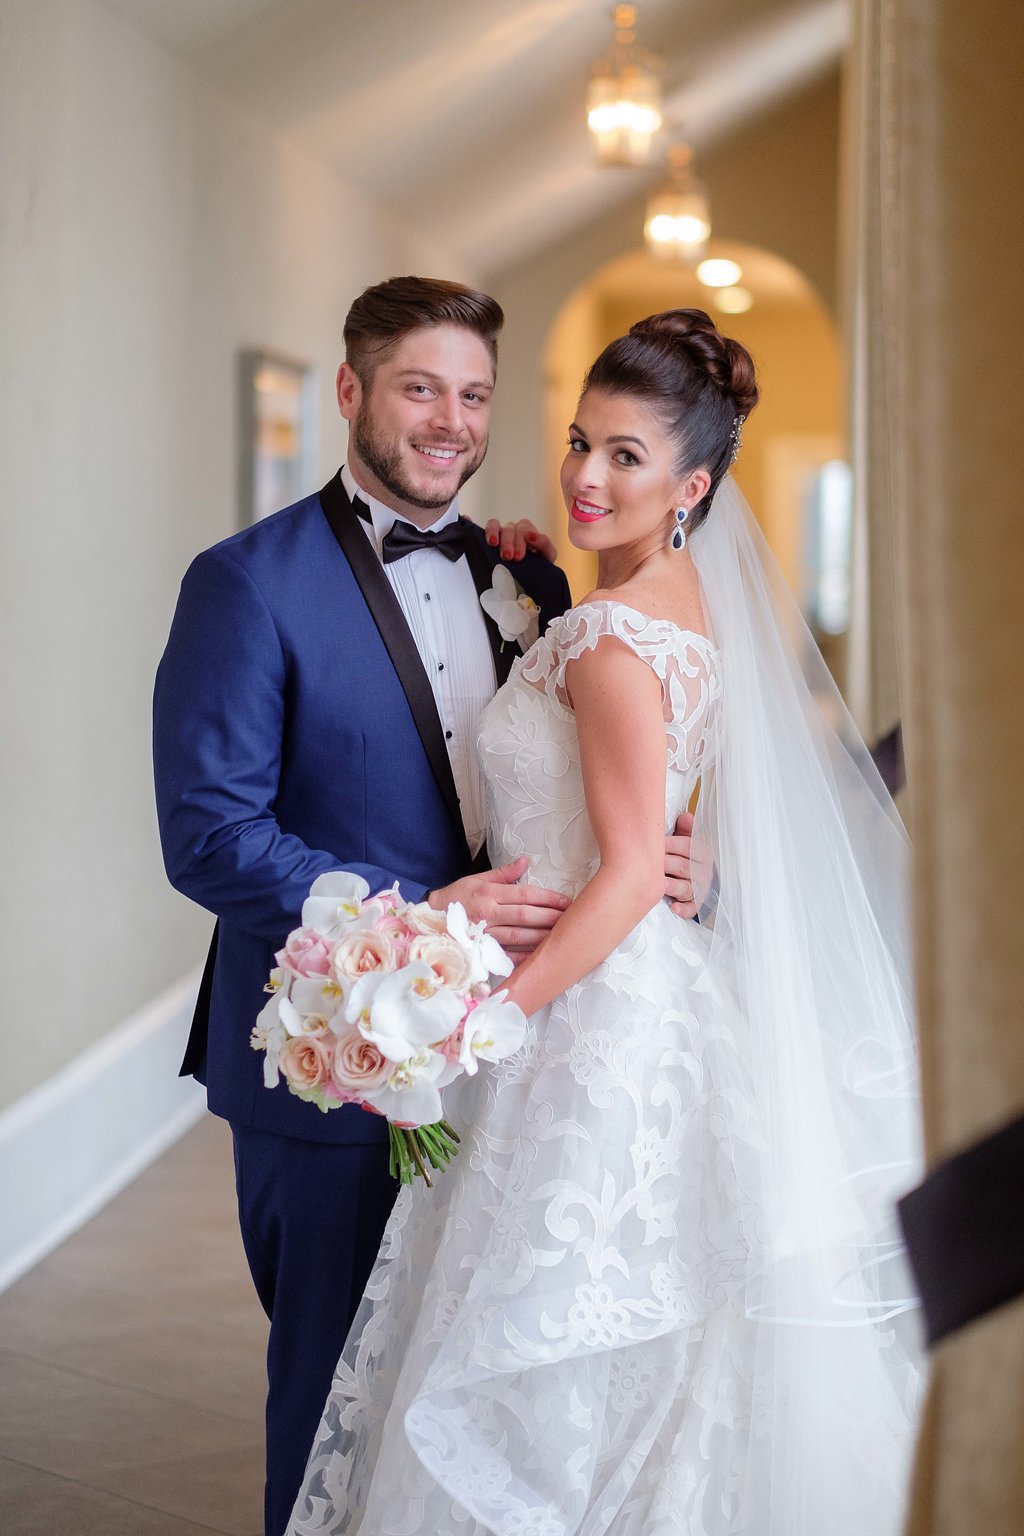 Bride and Groom Wedding Day Portrait | Oscar de la Renta Wedding Dress with Ivory and Pink Bouquet | Tampa Bay Wedding Photographer Marc Edwards Photographs